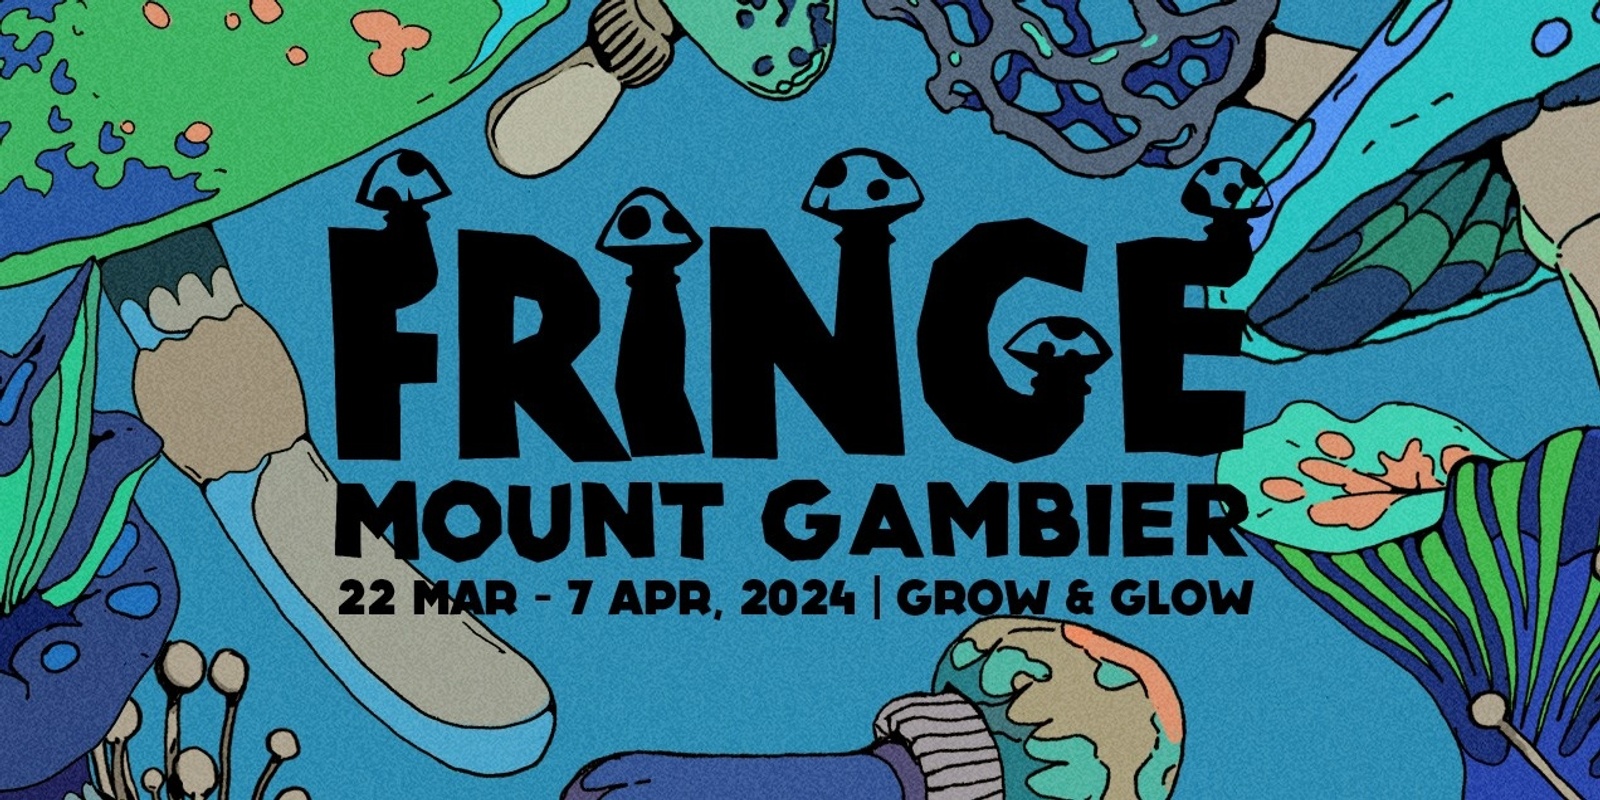 Fringe Mount Gambier's banner